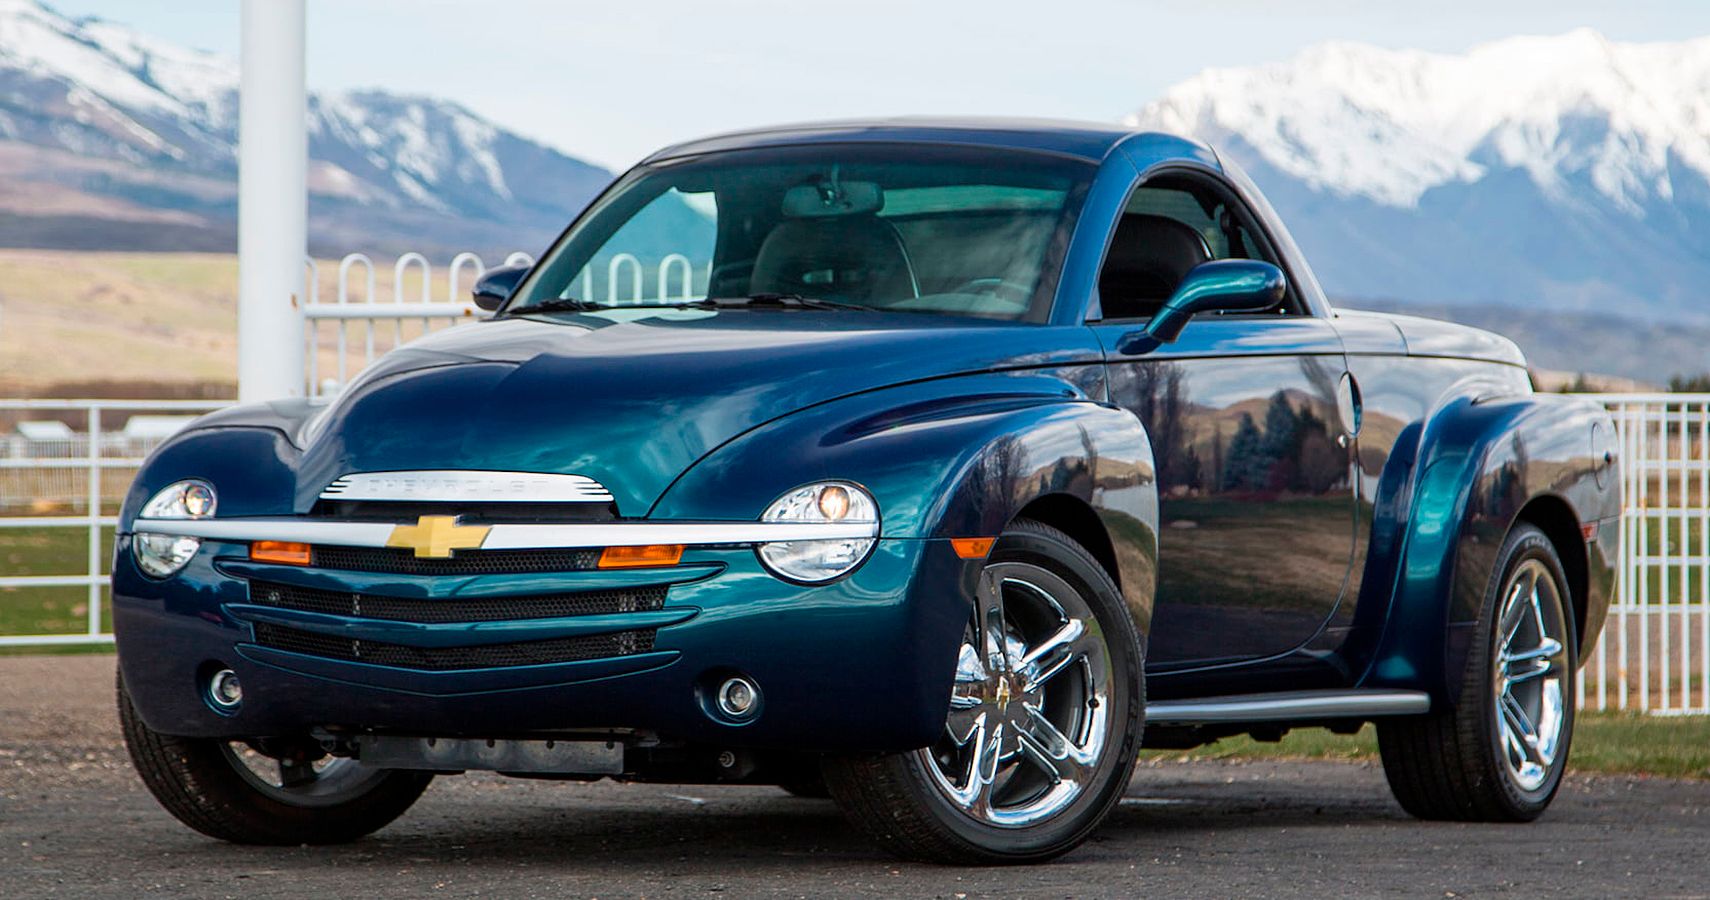 2003 Chevrolet SSR Pickup: $115,000